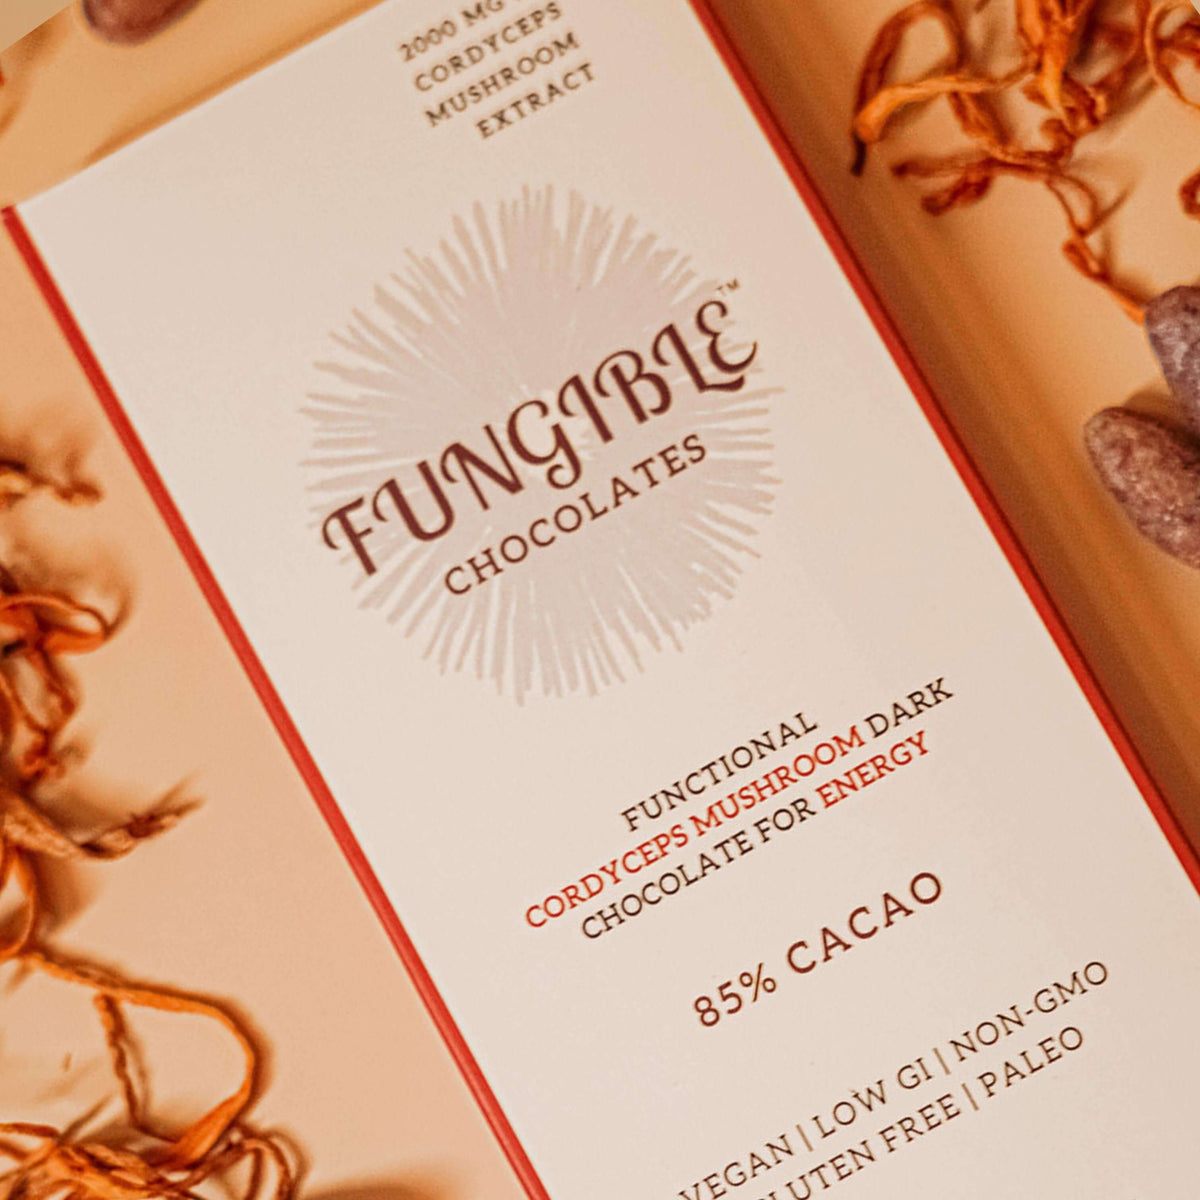 Functional Cordyceps Mushroom Dark Chocolate Bar for Energy (85% cacao) by Fungible Chocolates